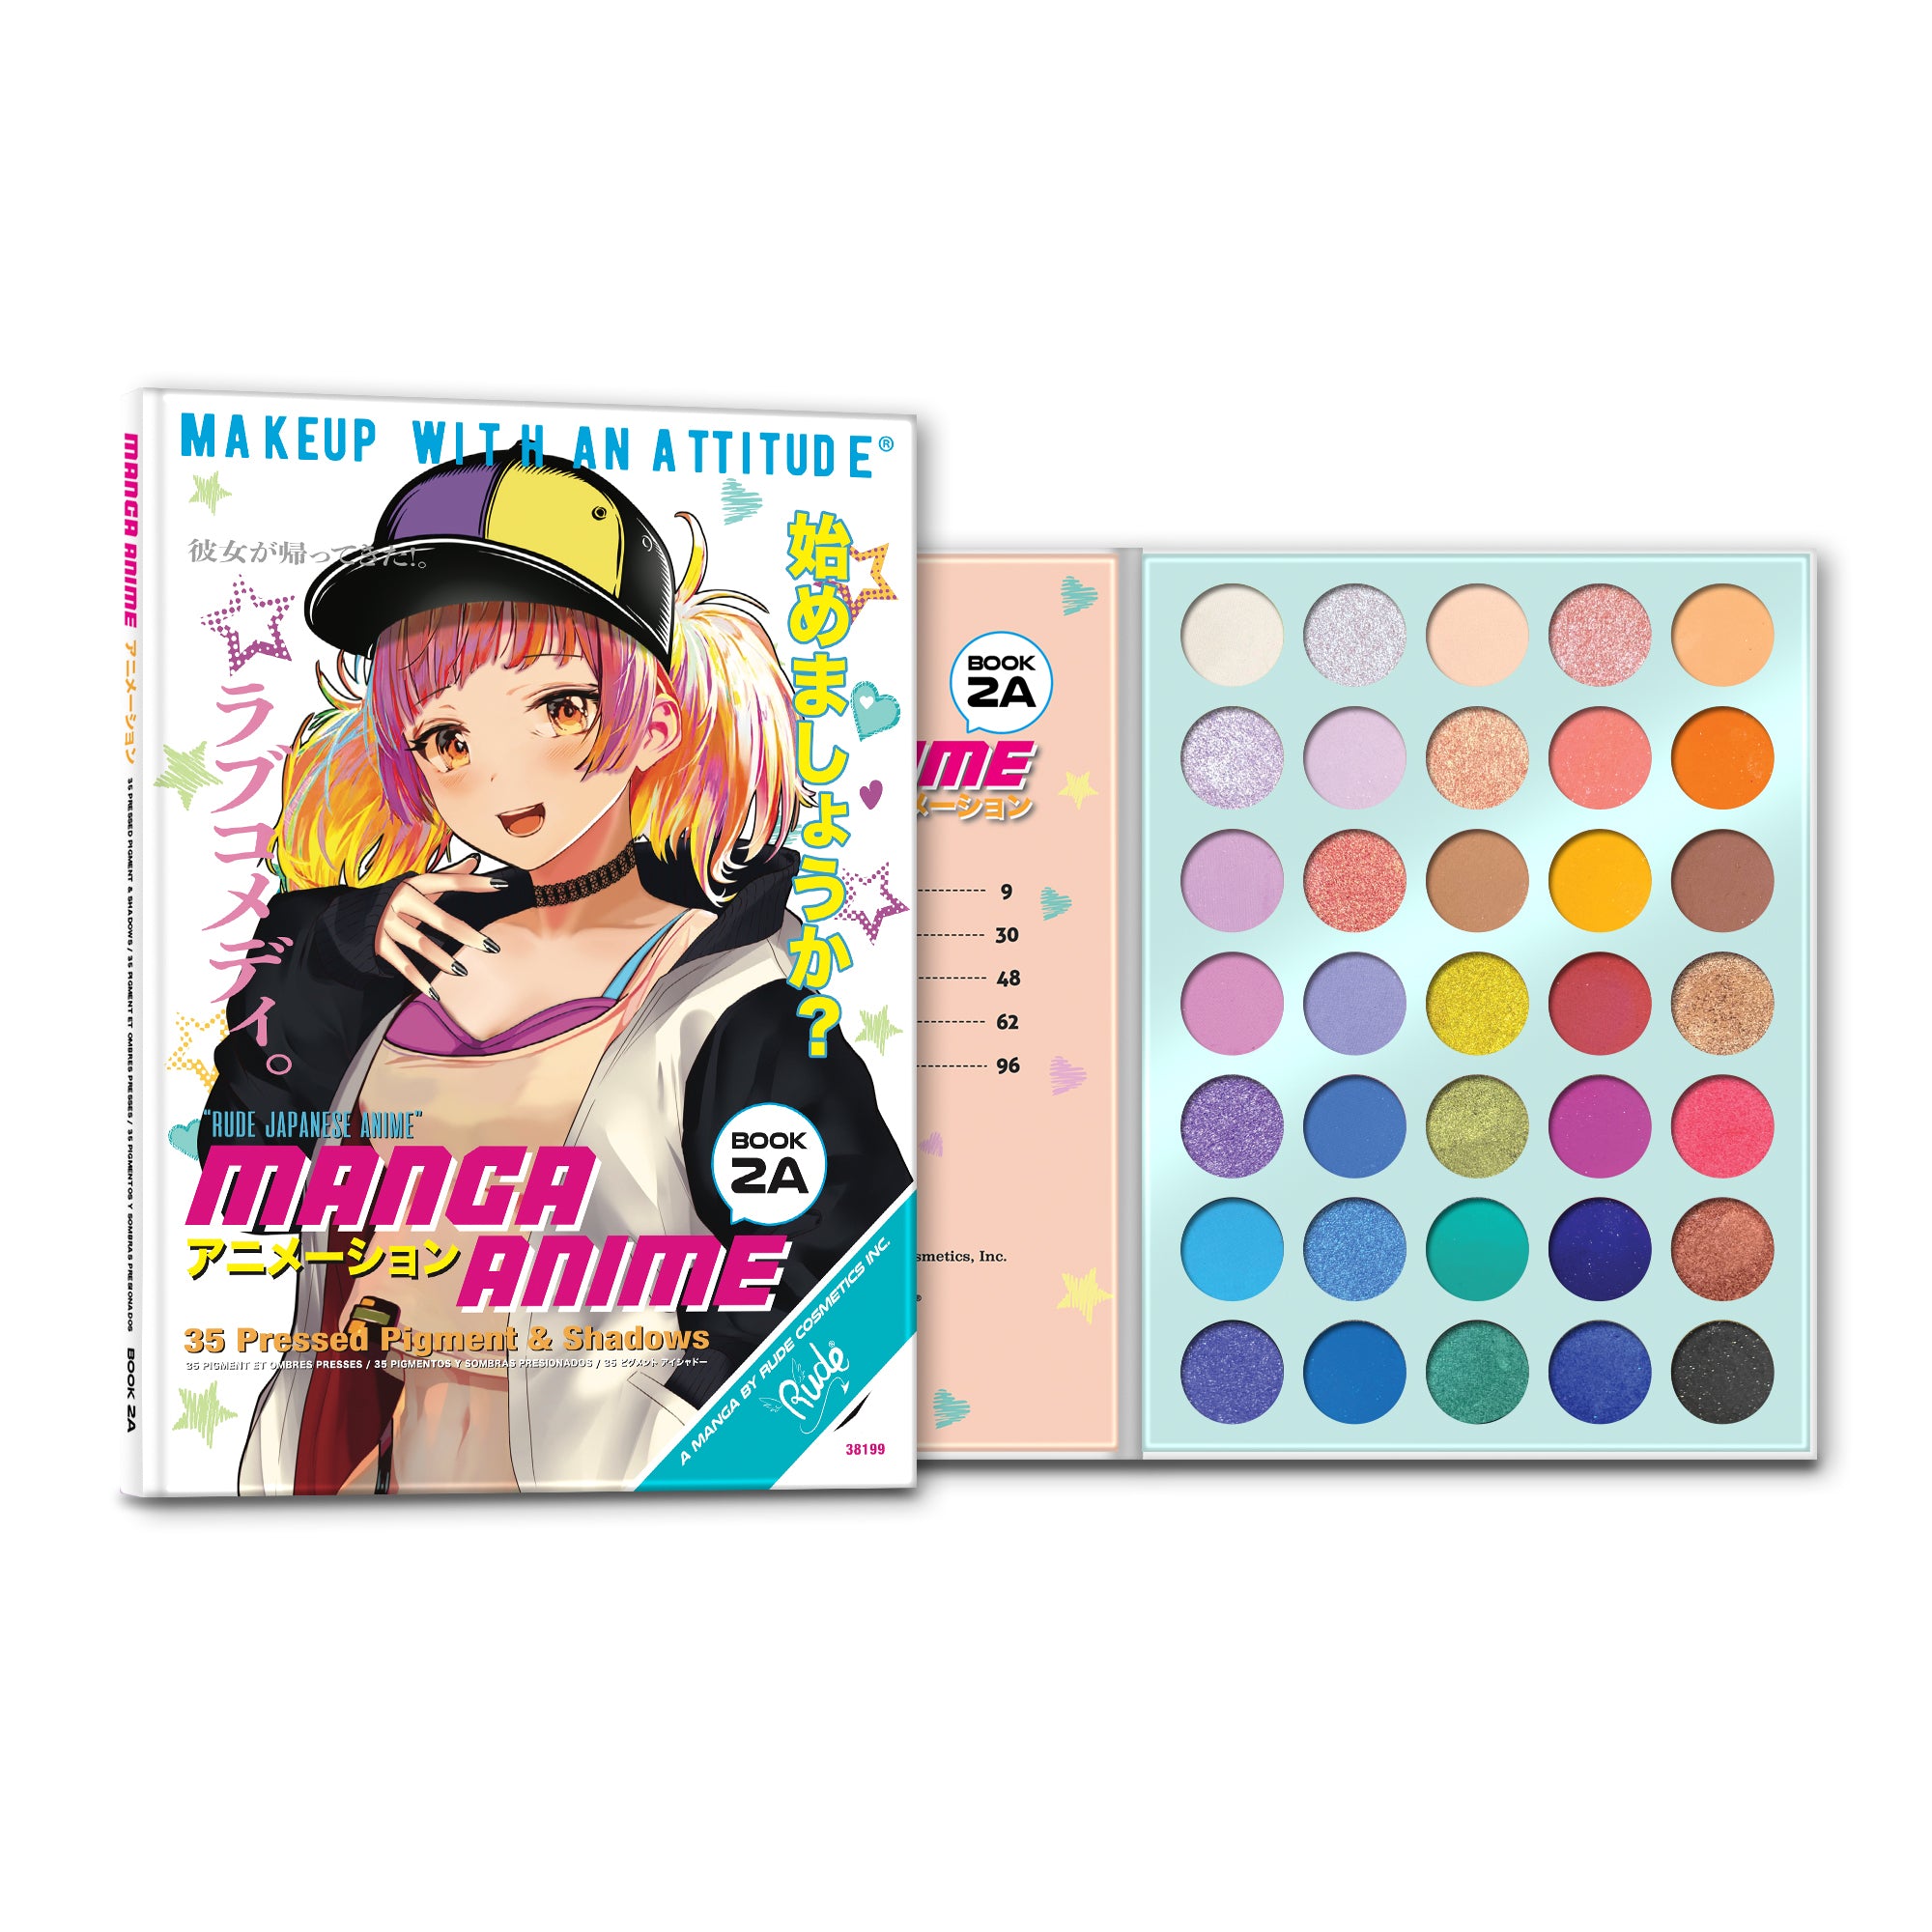 Anime Makeup Look Tutorial by Snitchery With Instructions | Makeup.com |  Makeup.com